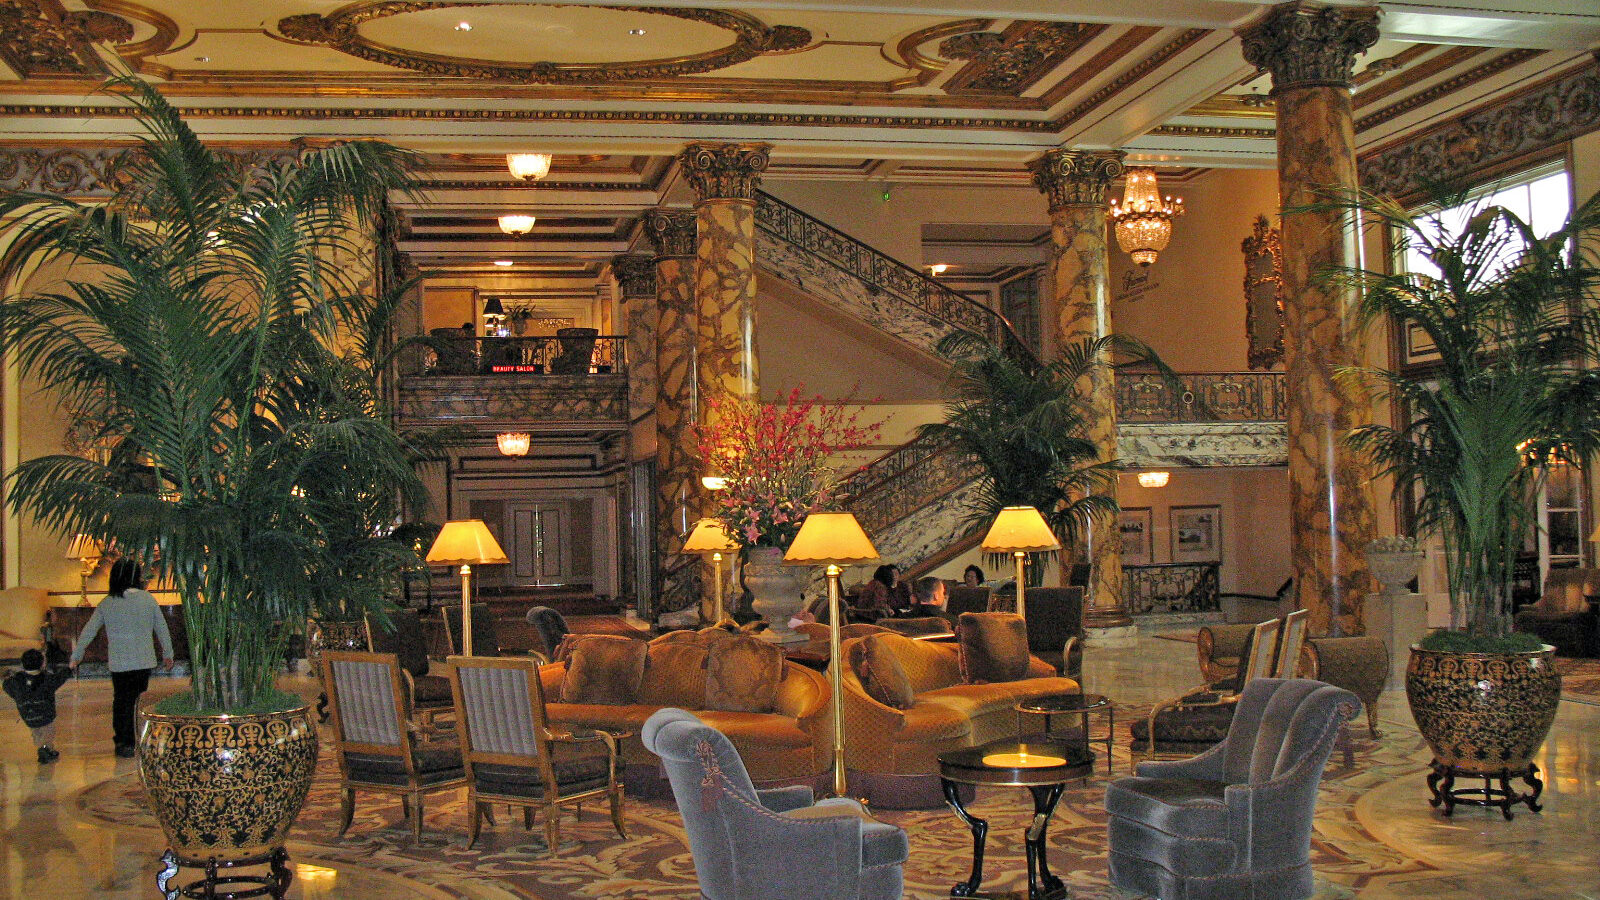 Lobby of Fairmont Hotel, San Francisco